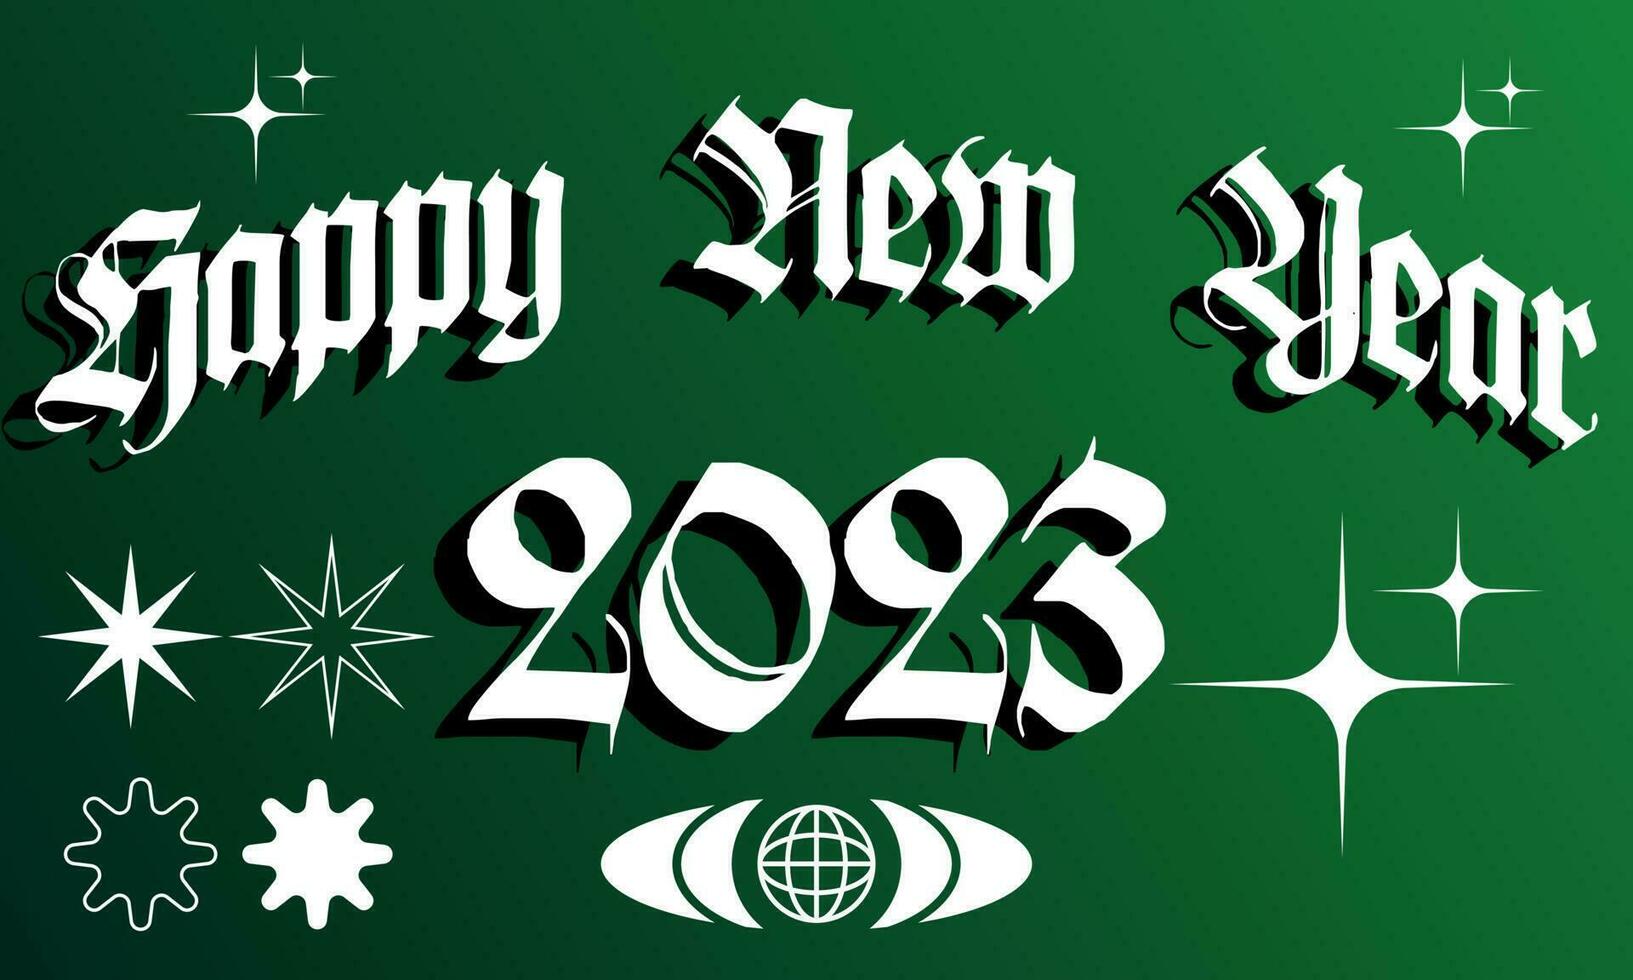 2023 feliz ano novo com estilo streetwear e fundo verde. para pôster, mídia social, banner vetor